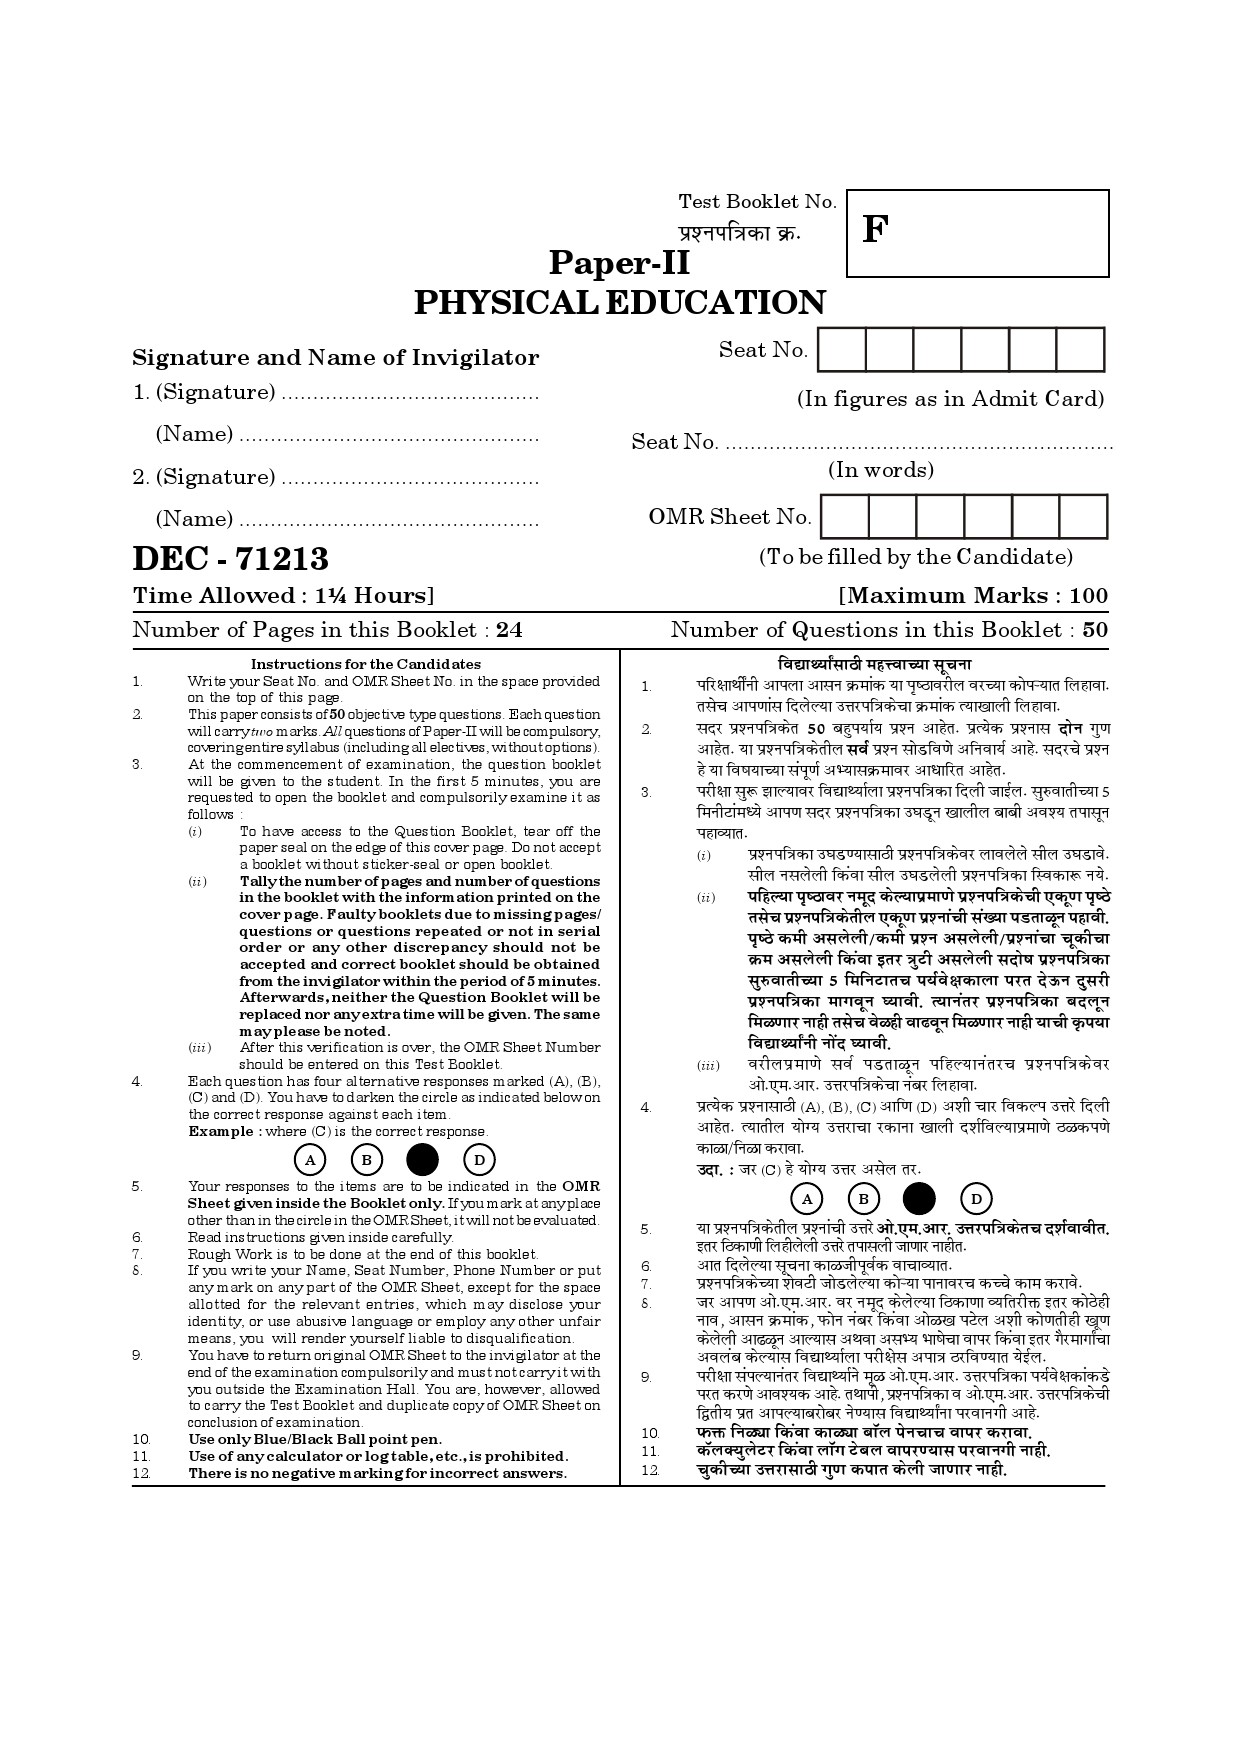 Maharashtra SET Physical Education Question Paper II December 2013 1